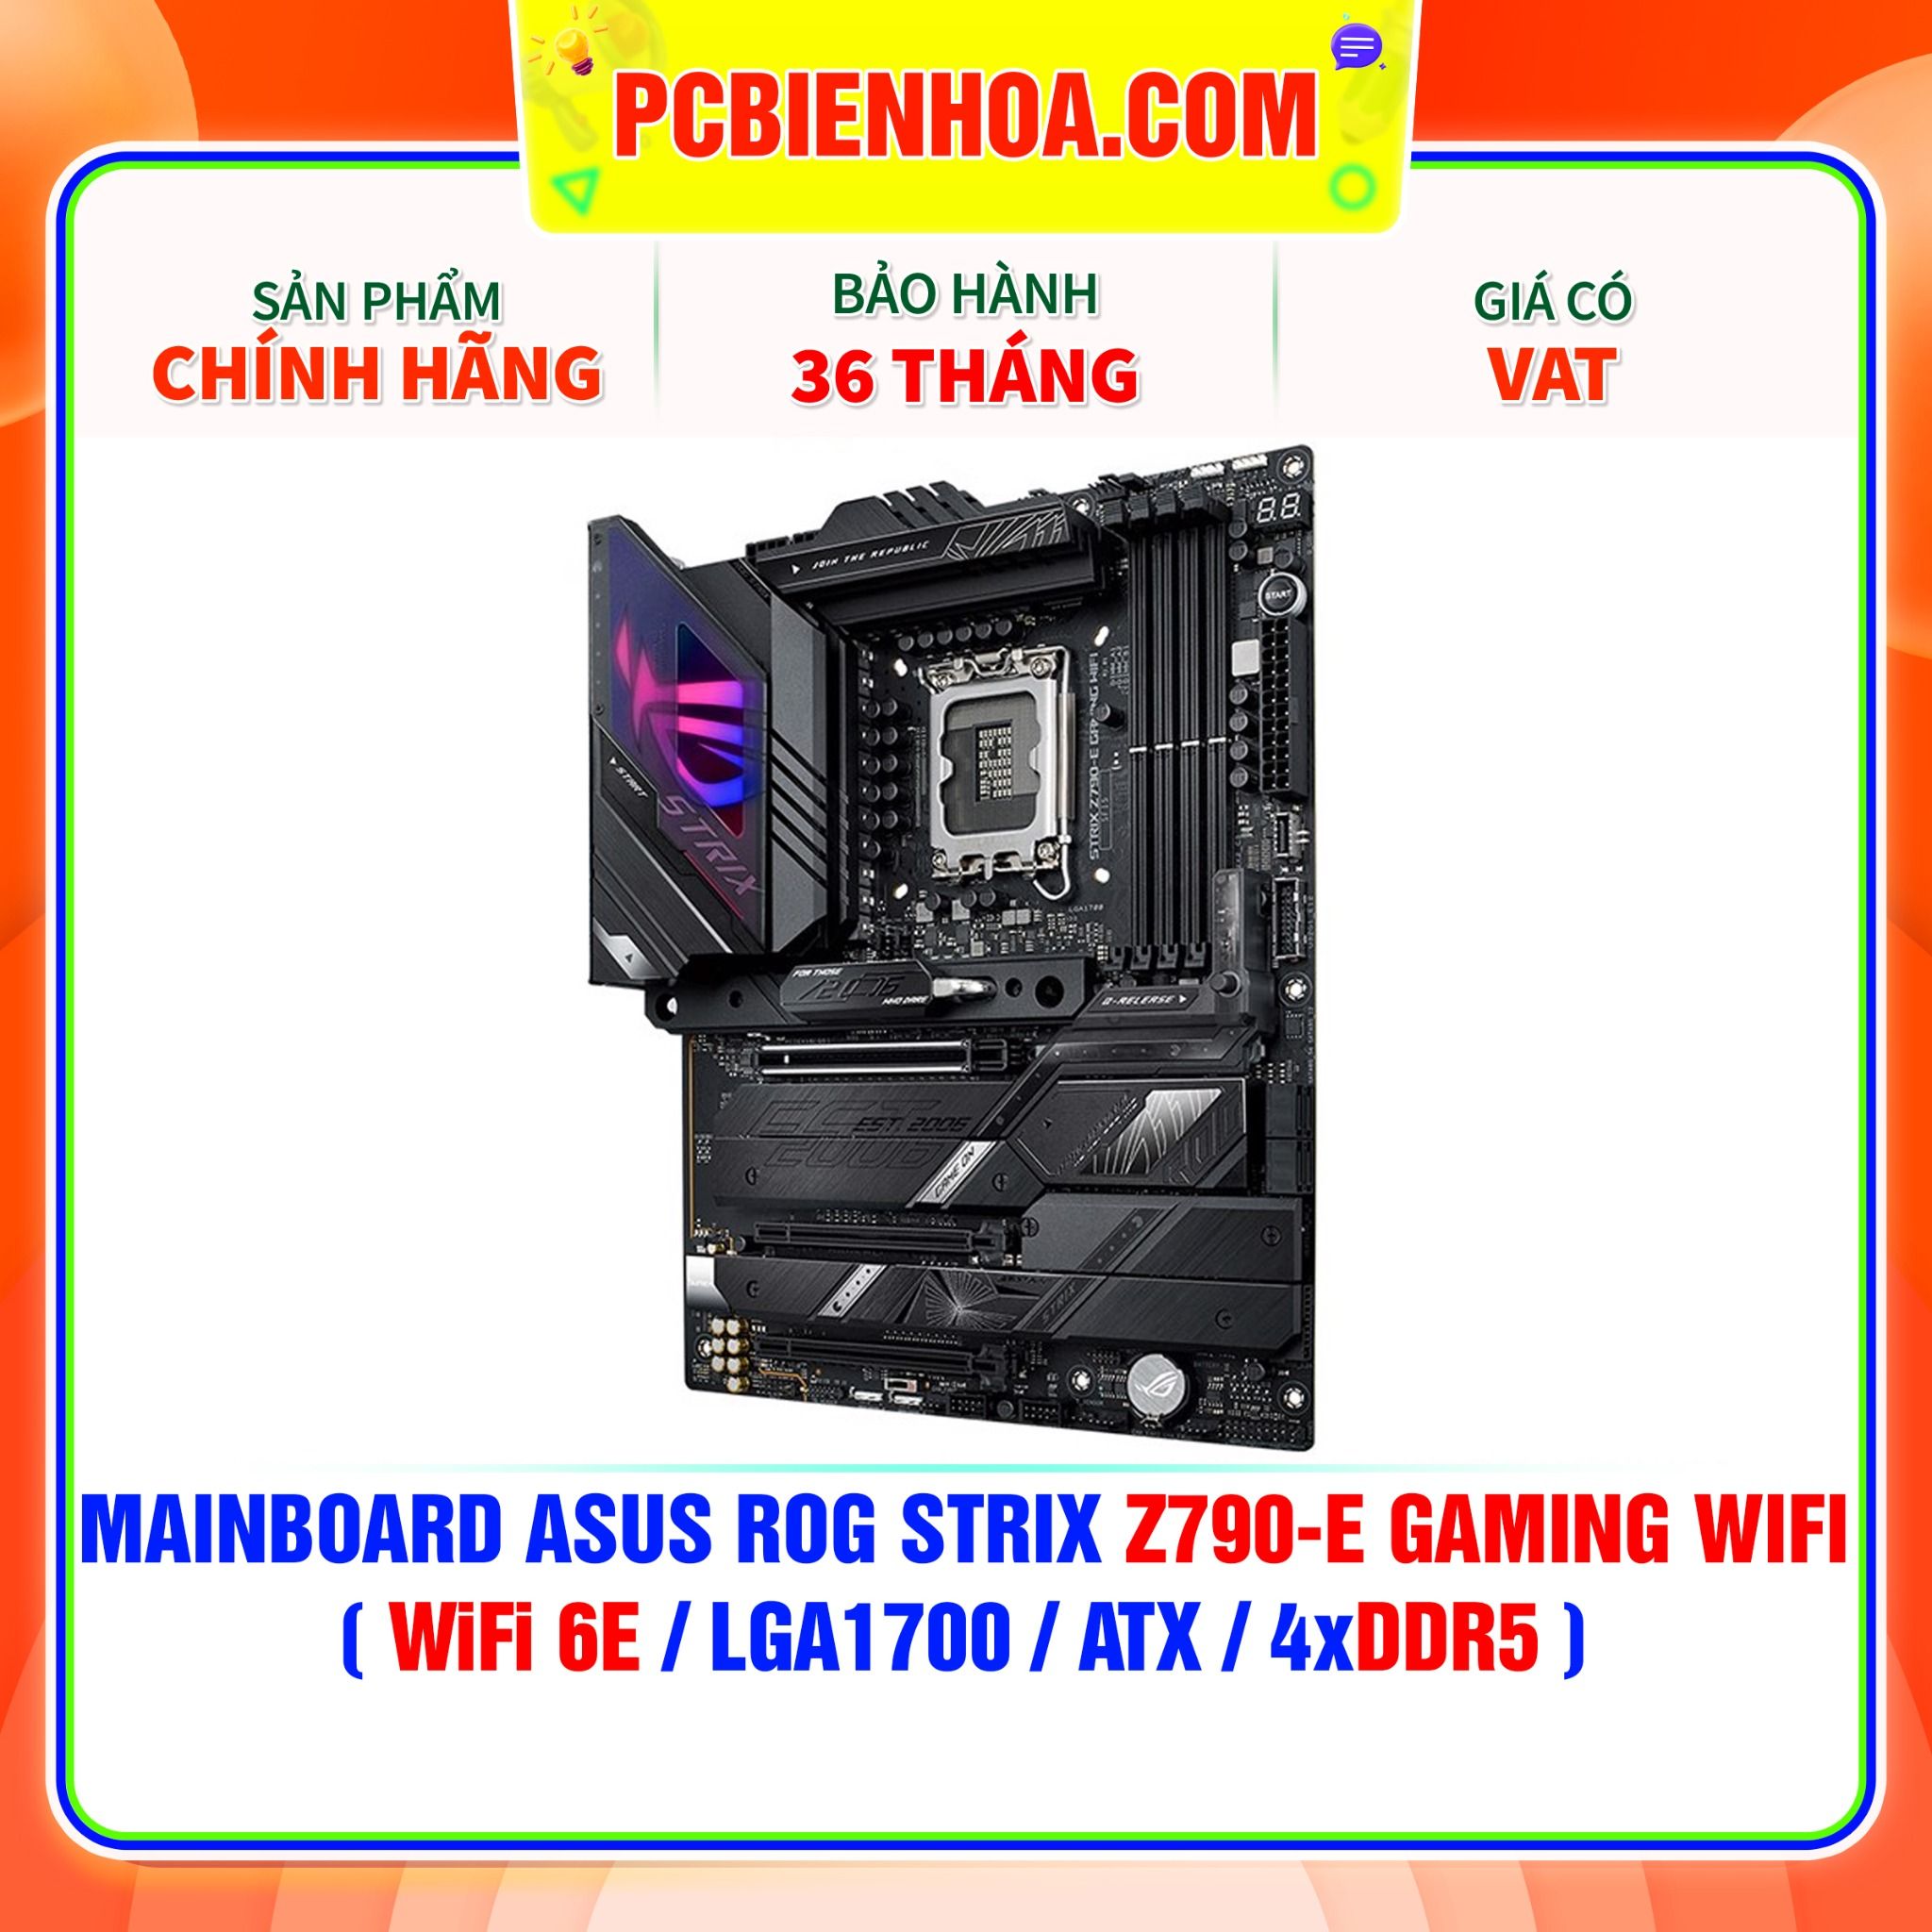  MAINBOARD ASUS ROG STRIX Z790-E GAMING WIFI ( WiFi 6E / LGA1700 / ATX / 4xDDR5 ) 